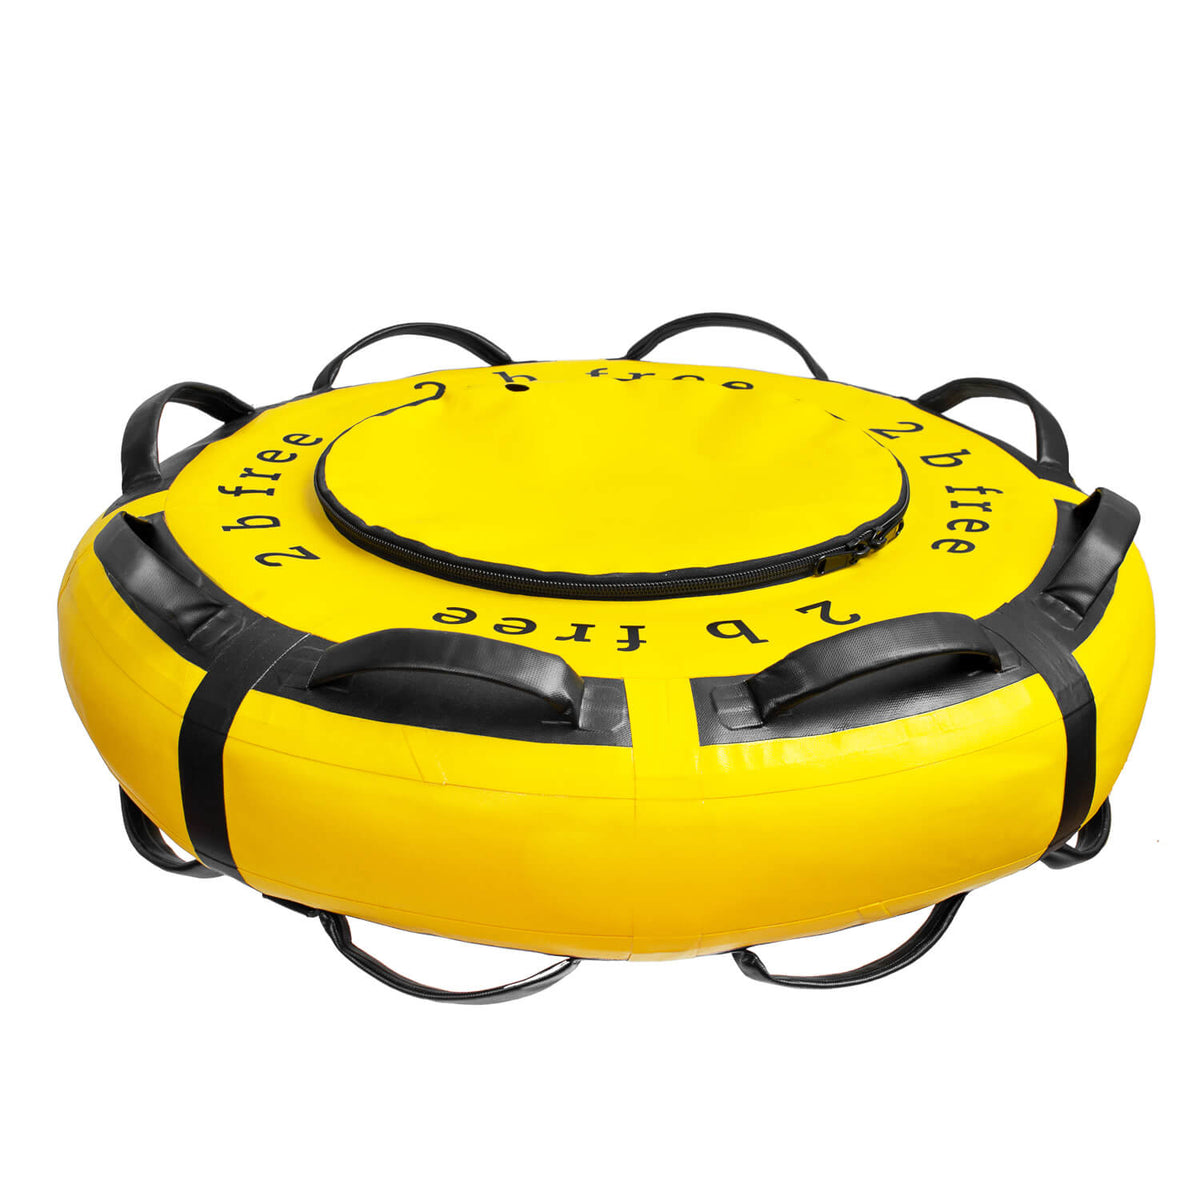 2BFREE Freediving Buoy Yellow - FreedivingWarehouse